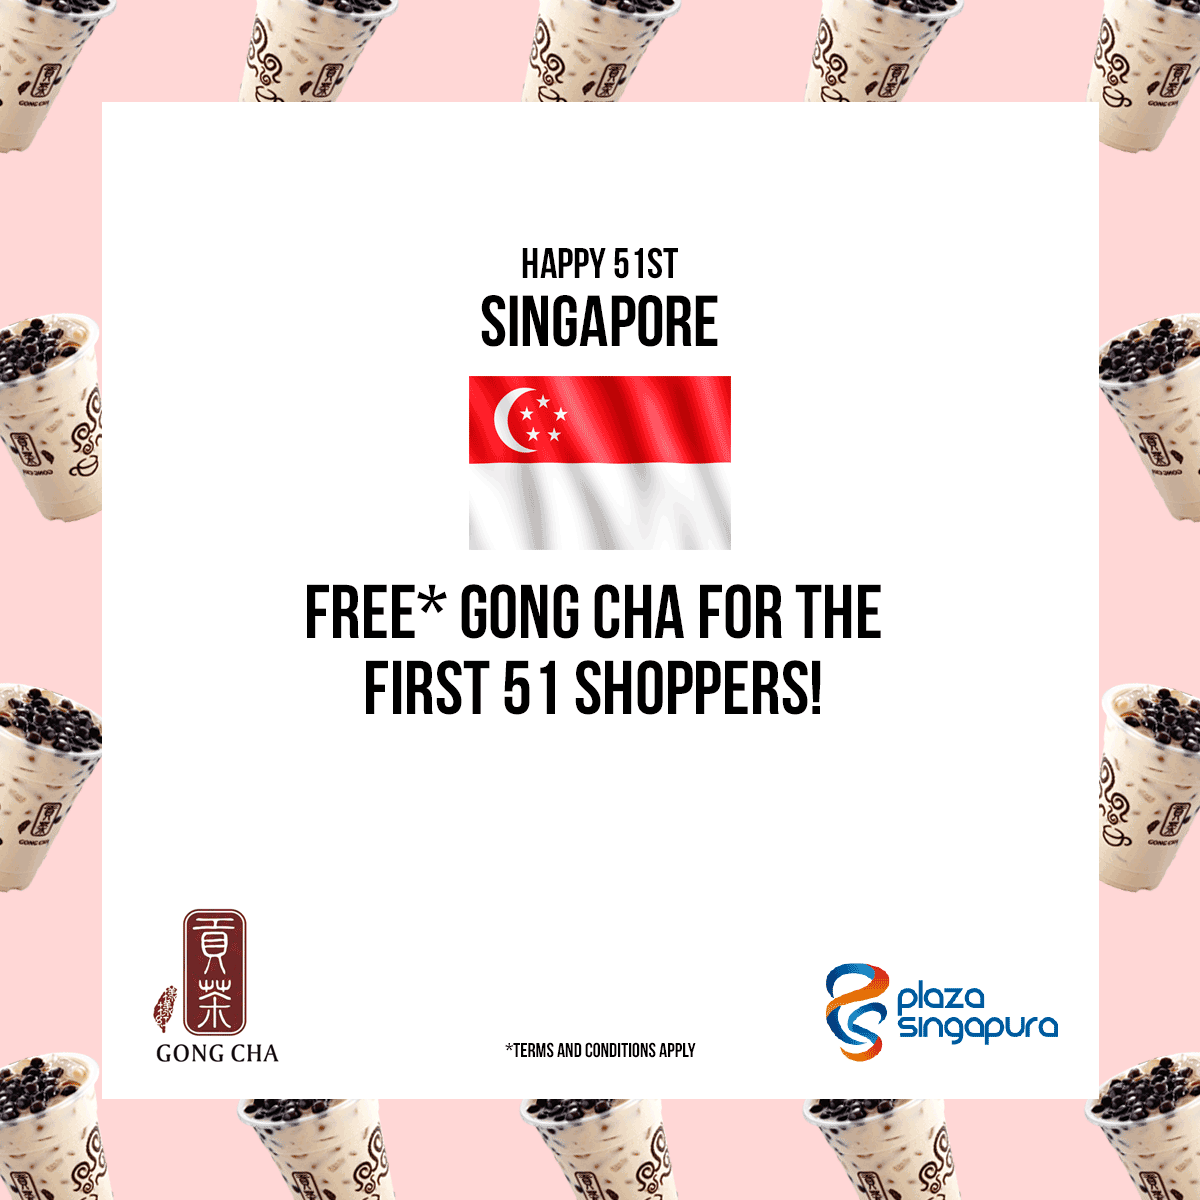 Plaza Singapura Singapore National Day Promotion Redeem $6 Gong Cha Voucher 9 to 14 Aug 2016